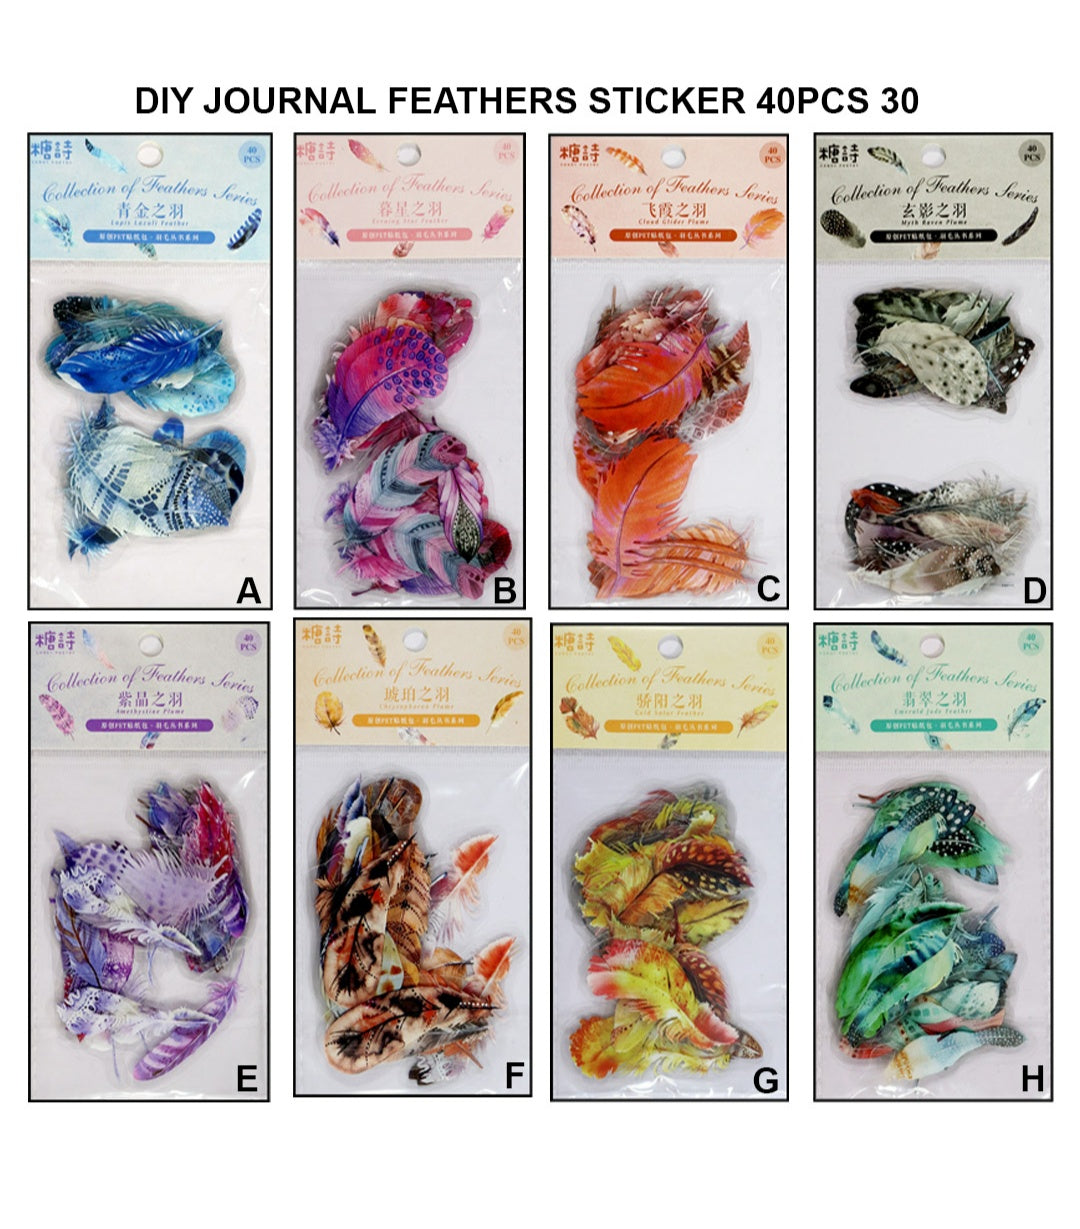 Diy Journal Feathers Sticker 40Pcs 30 Tz2208Bbt | INKARTO